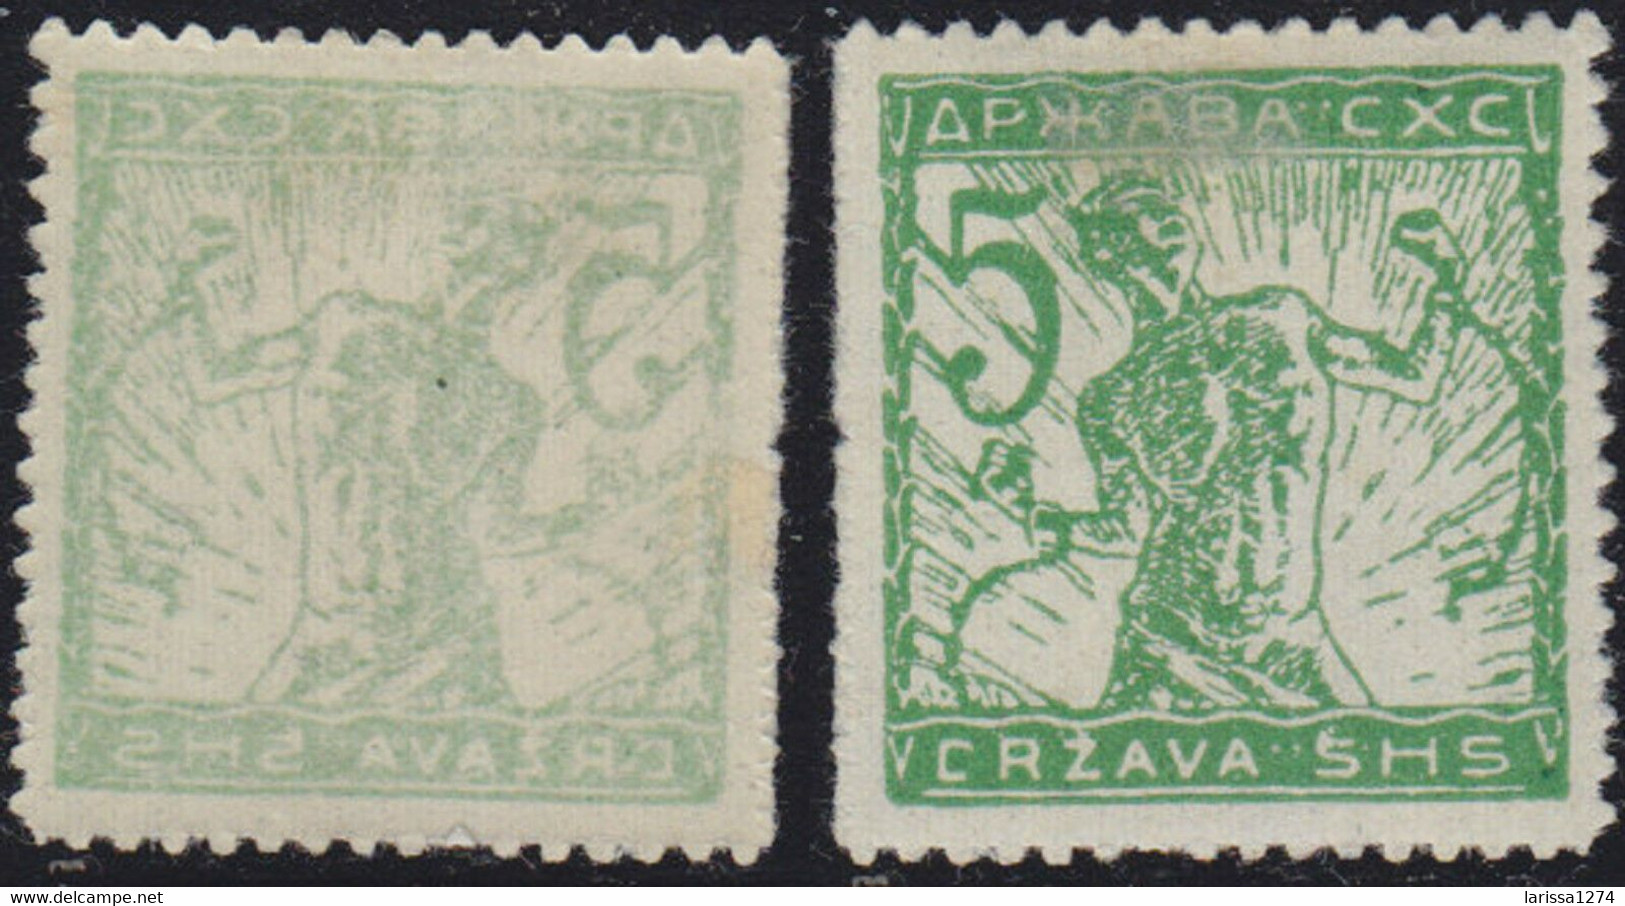 543.Yugoslavia SHS Slovenia 1919 Definitive ERROR Abklatsch MH Michel100 - Sin Dentar, Pruebas De Impresión Y Variedades